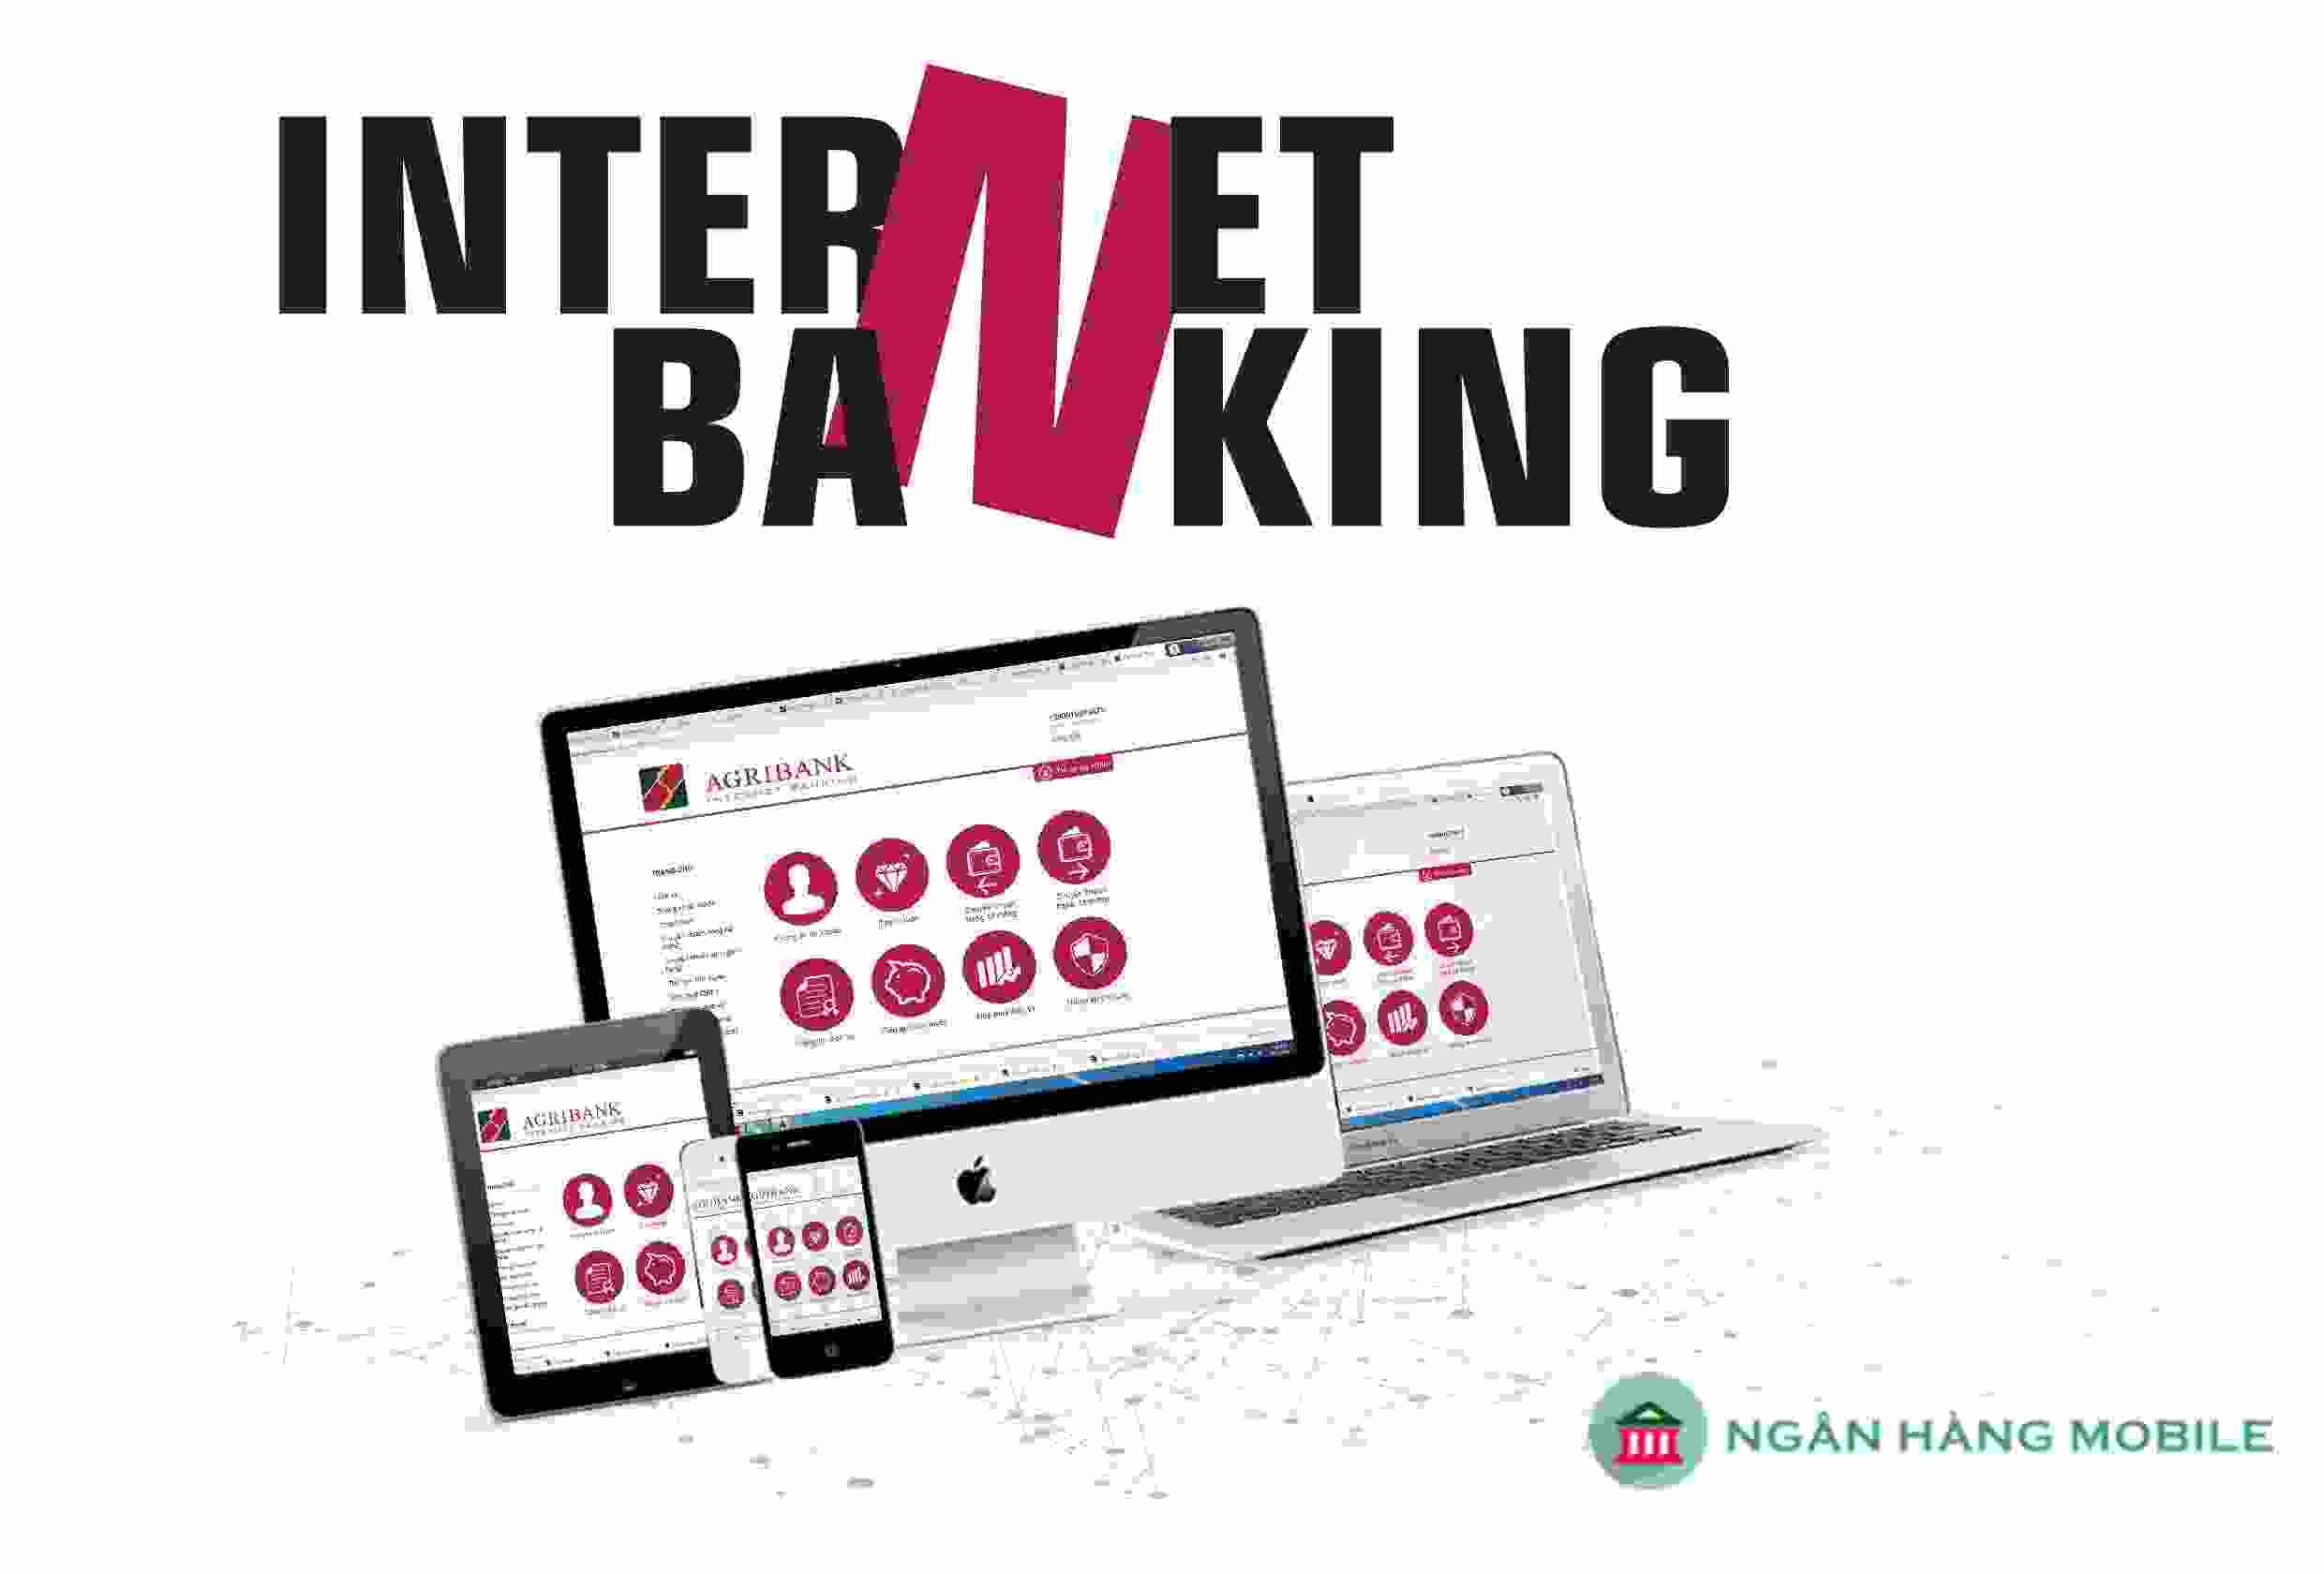 Internet banking Agribank